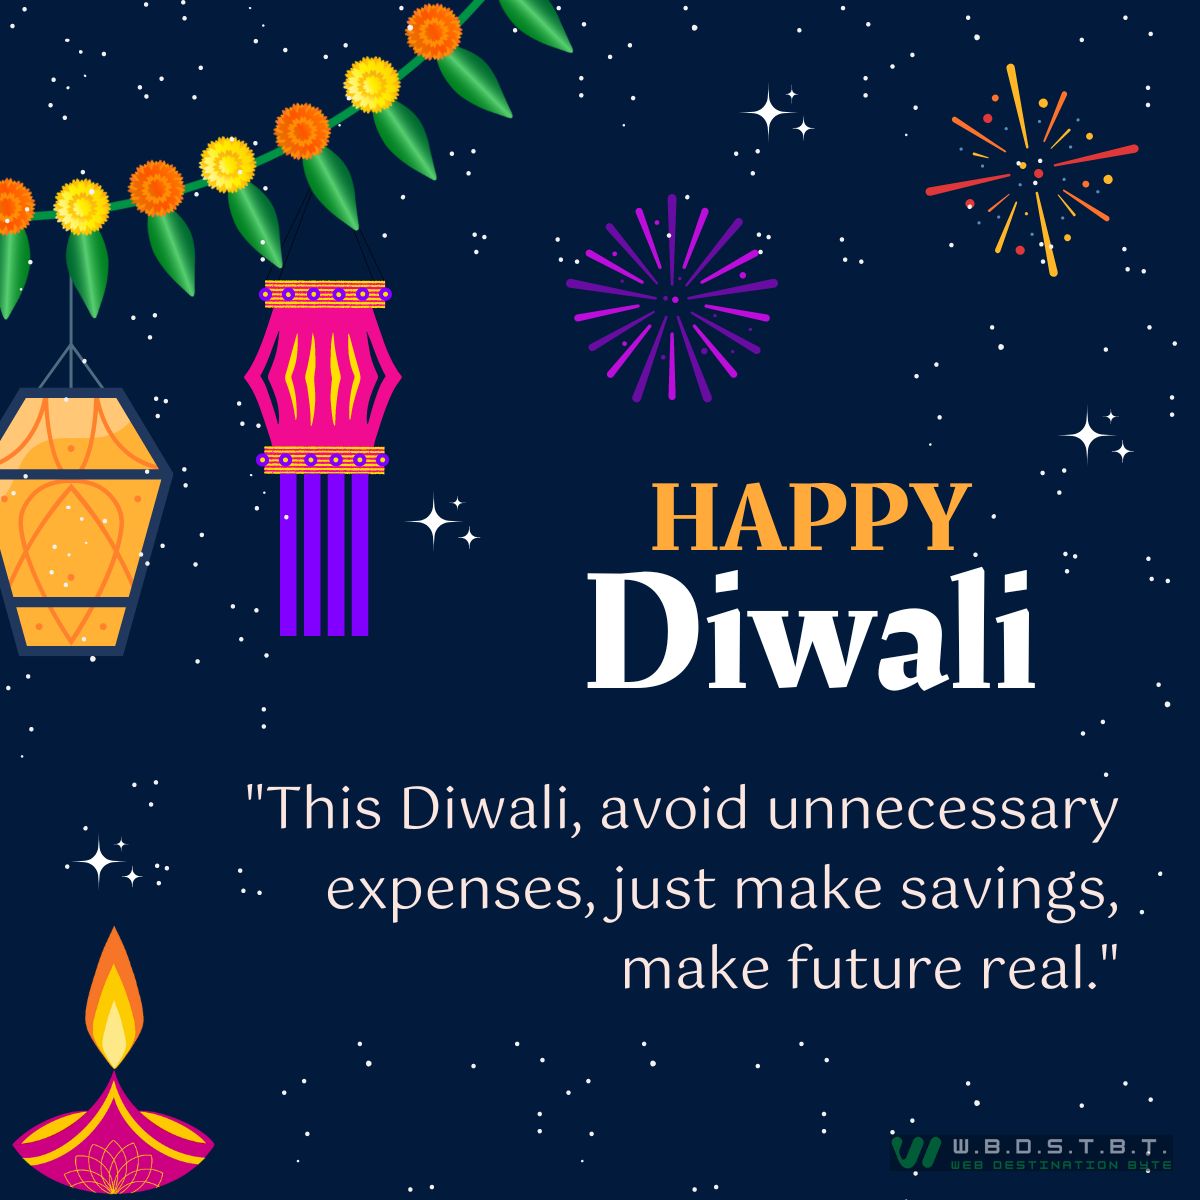 "This Diwali, avoid unnecessary expenses, just make savings, make future real."